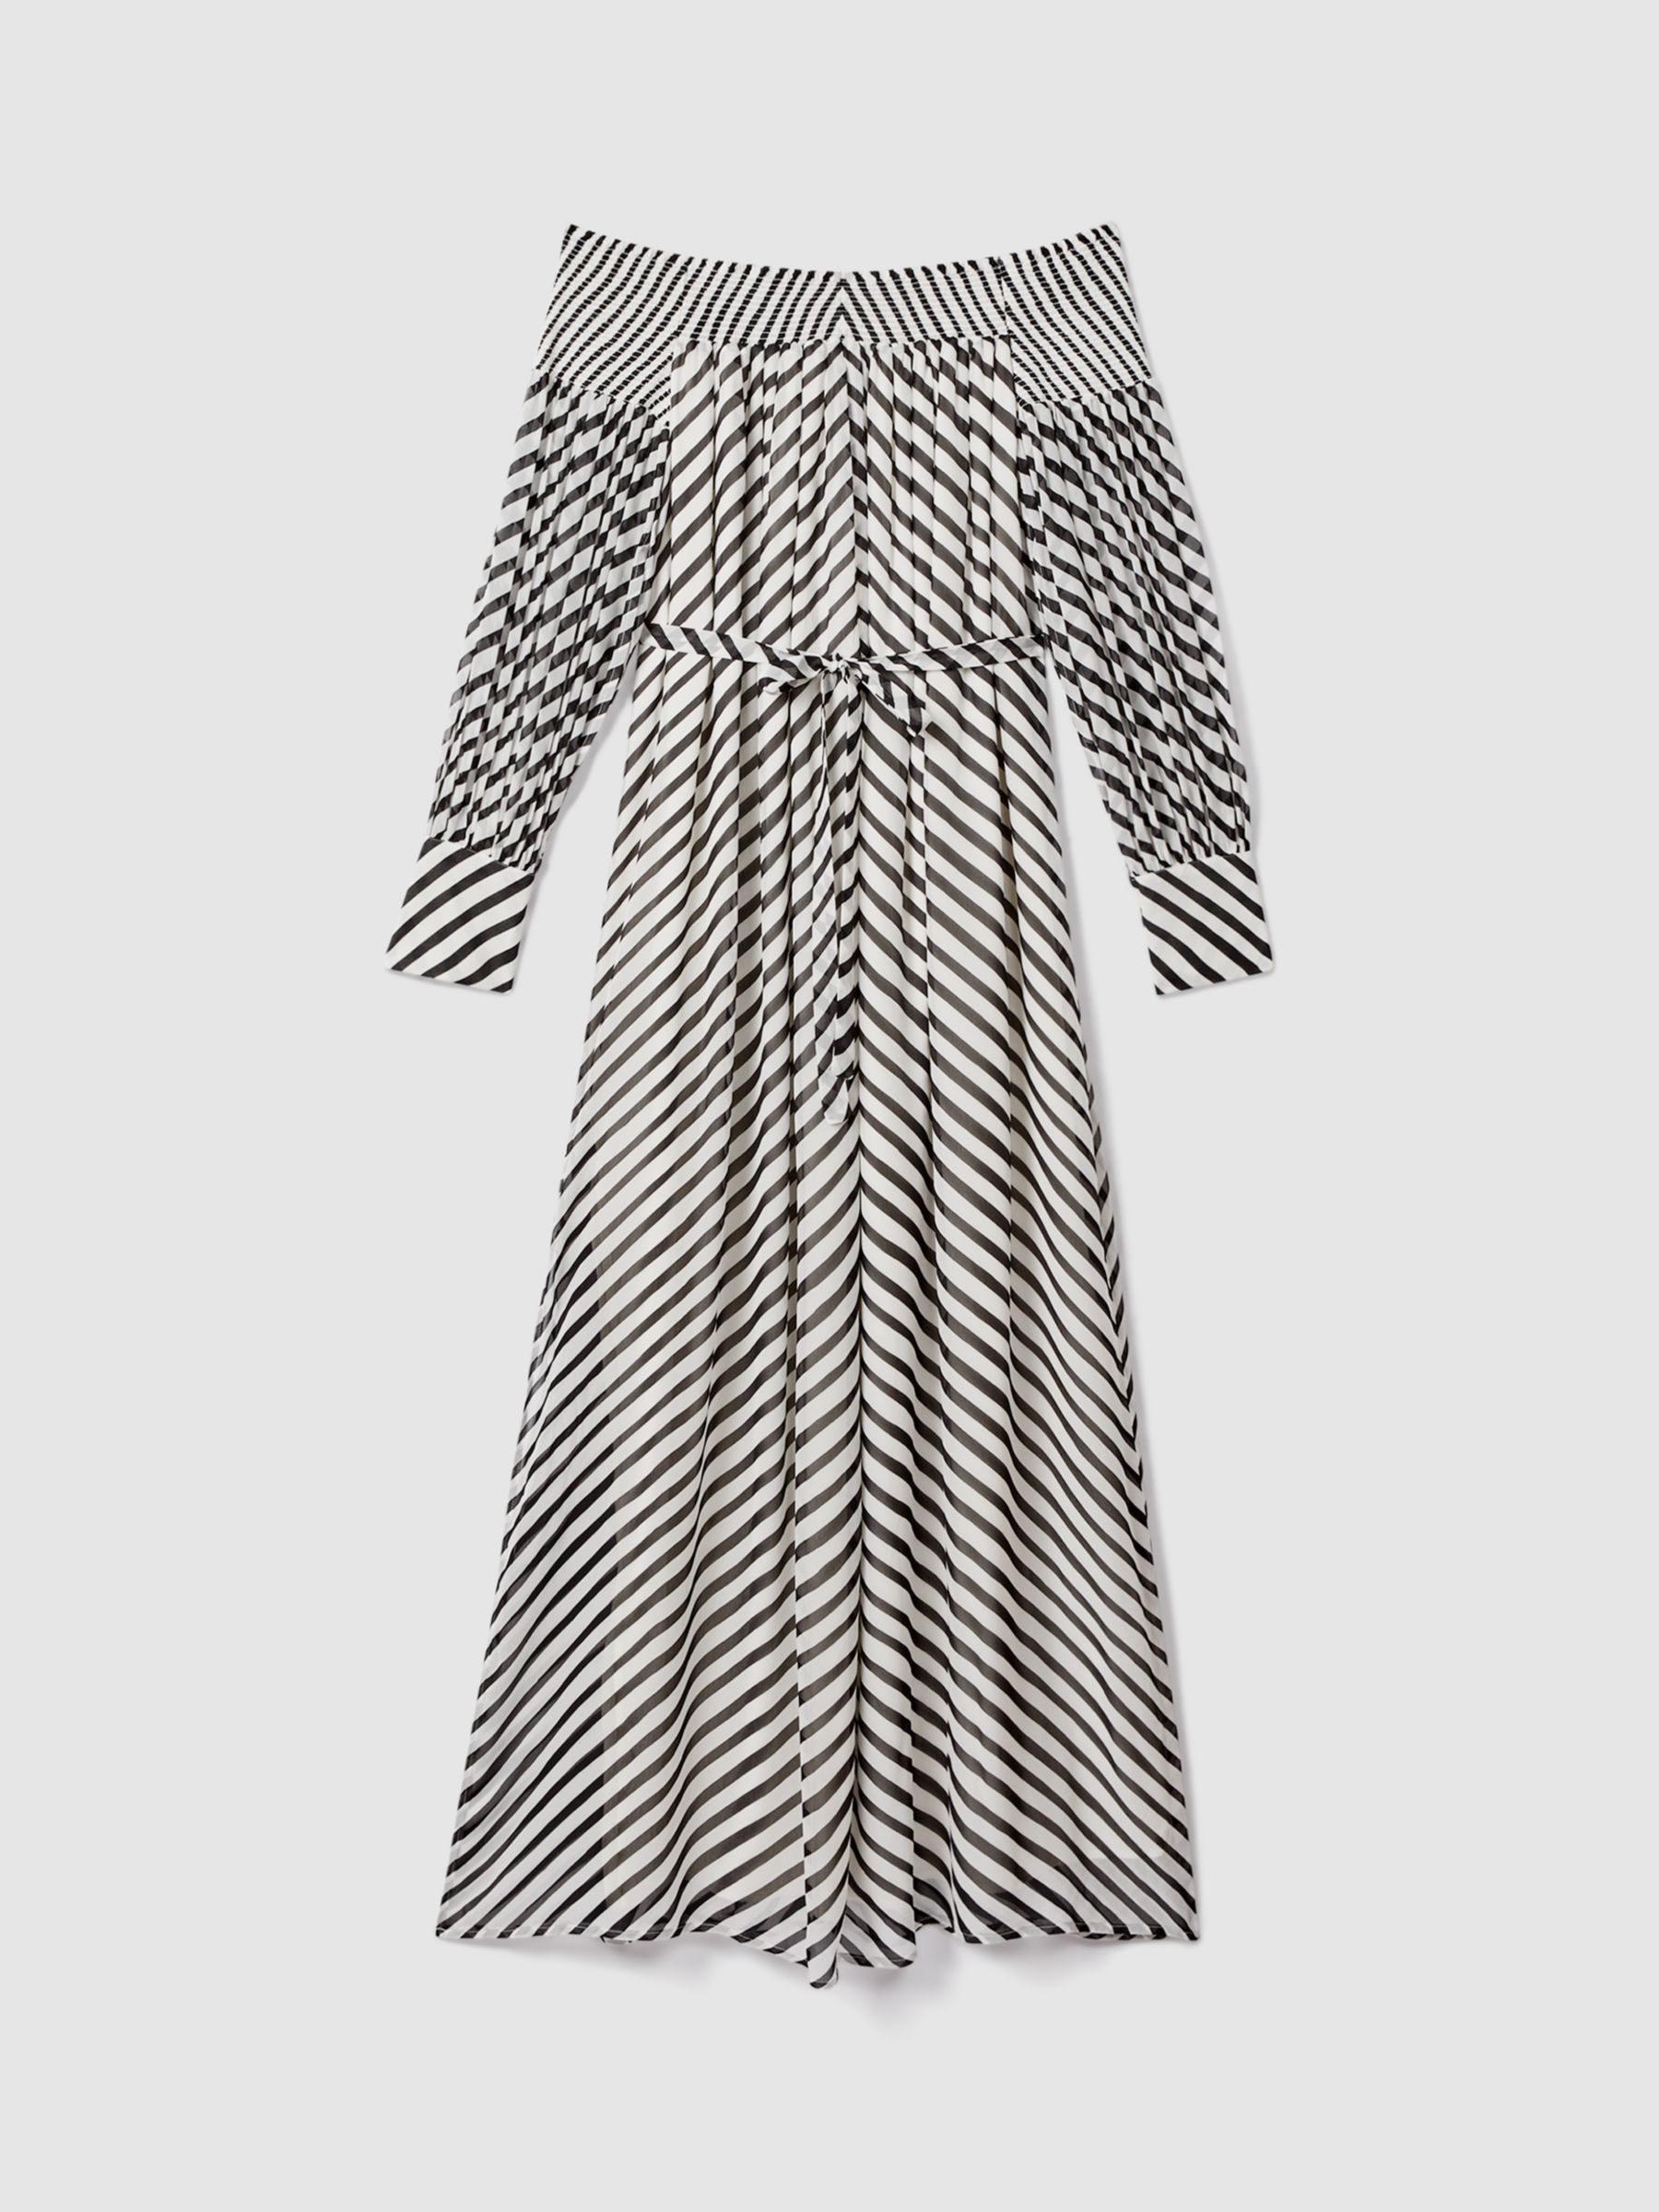 Reiss Fabia Stripe Badot Maxi Dress, Black/Cream, 6